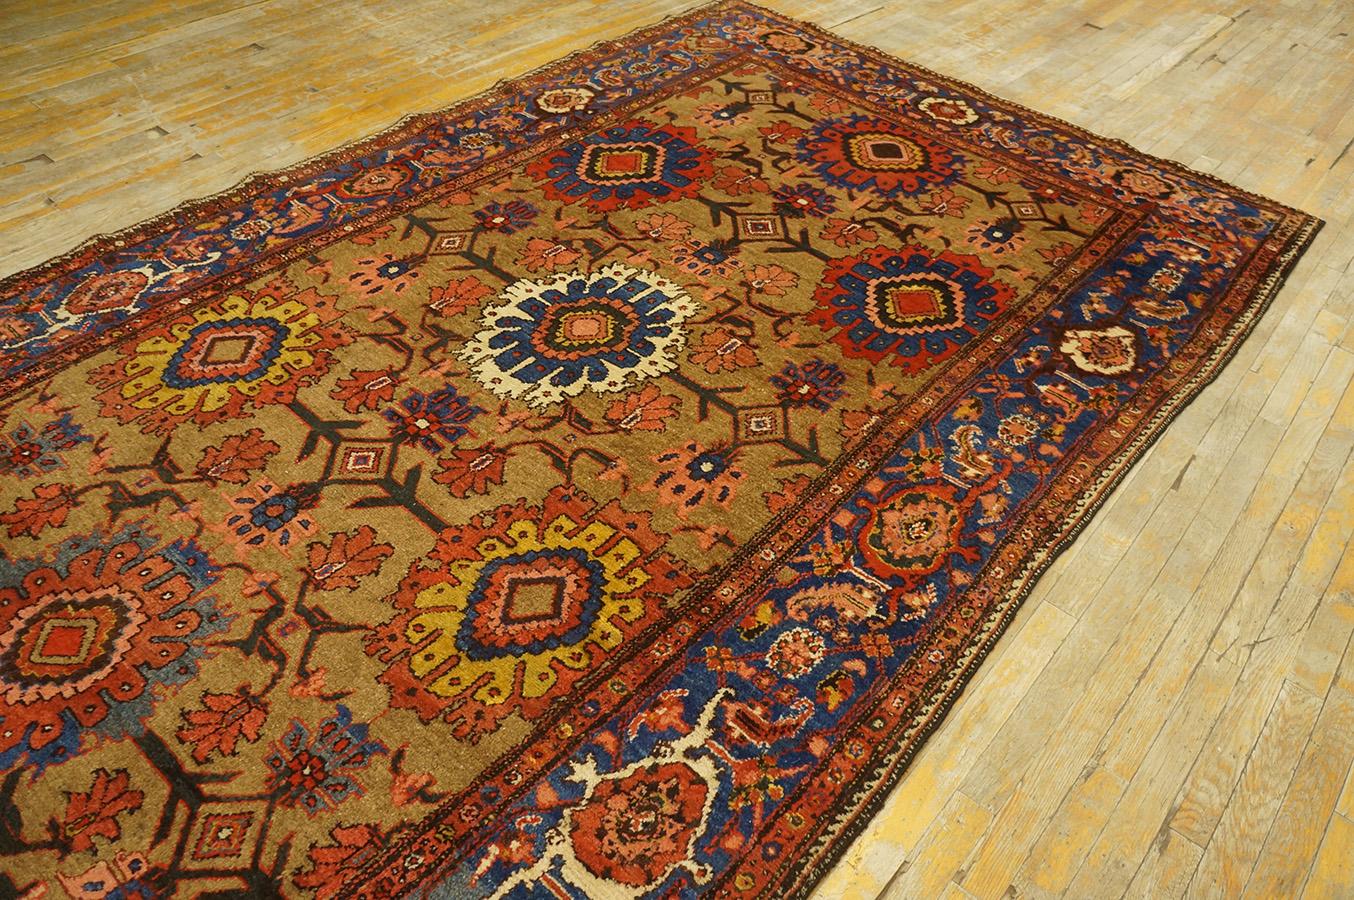 Late 19th Century Persian Bakhtiari Gallery Carpet (6'2